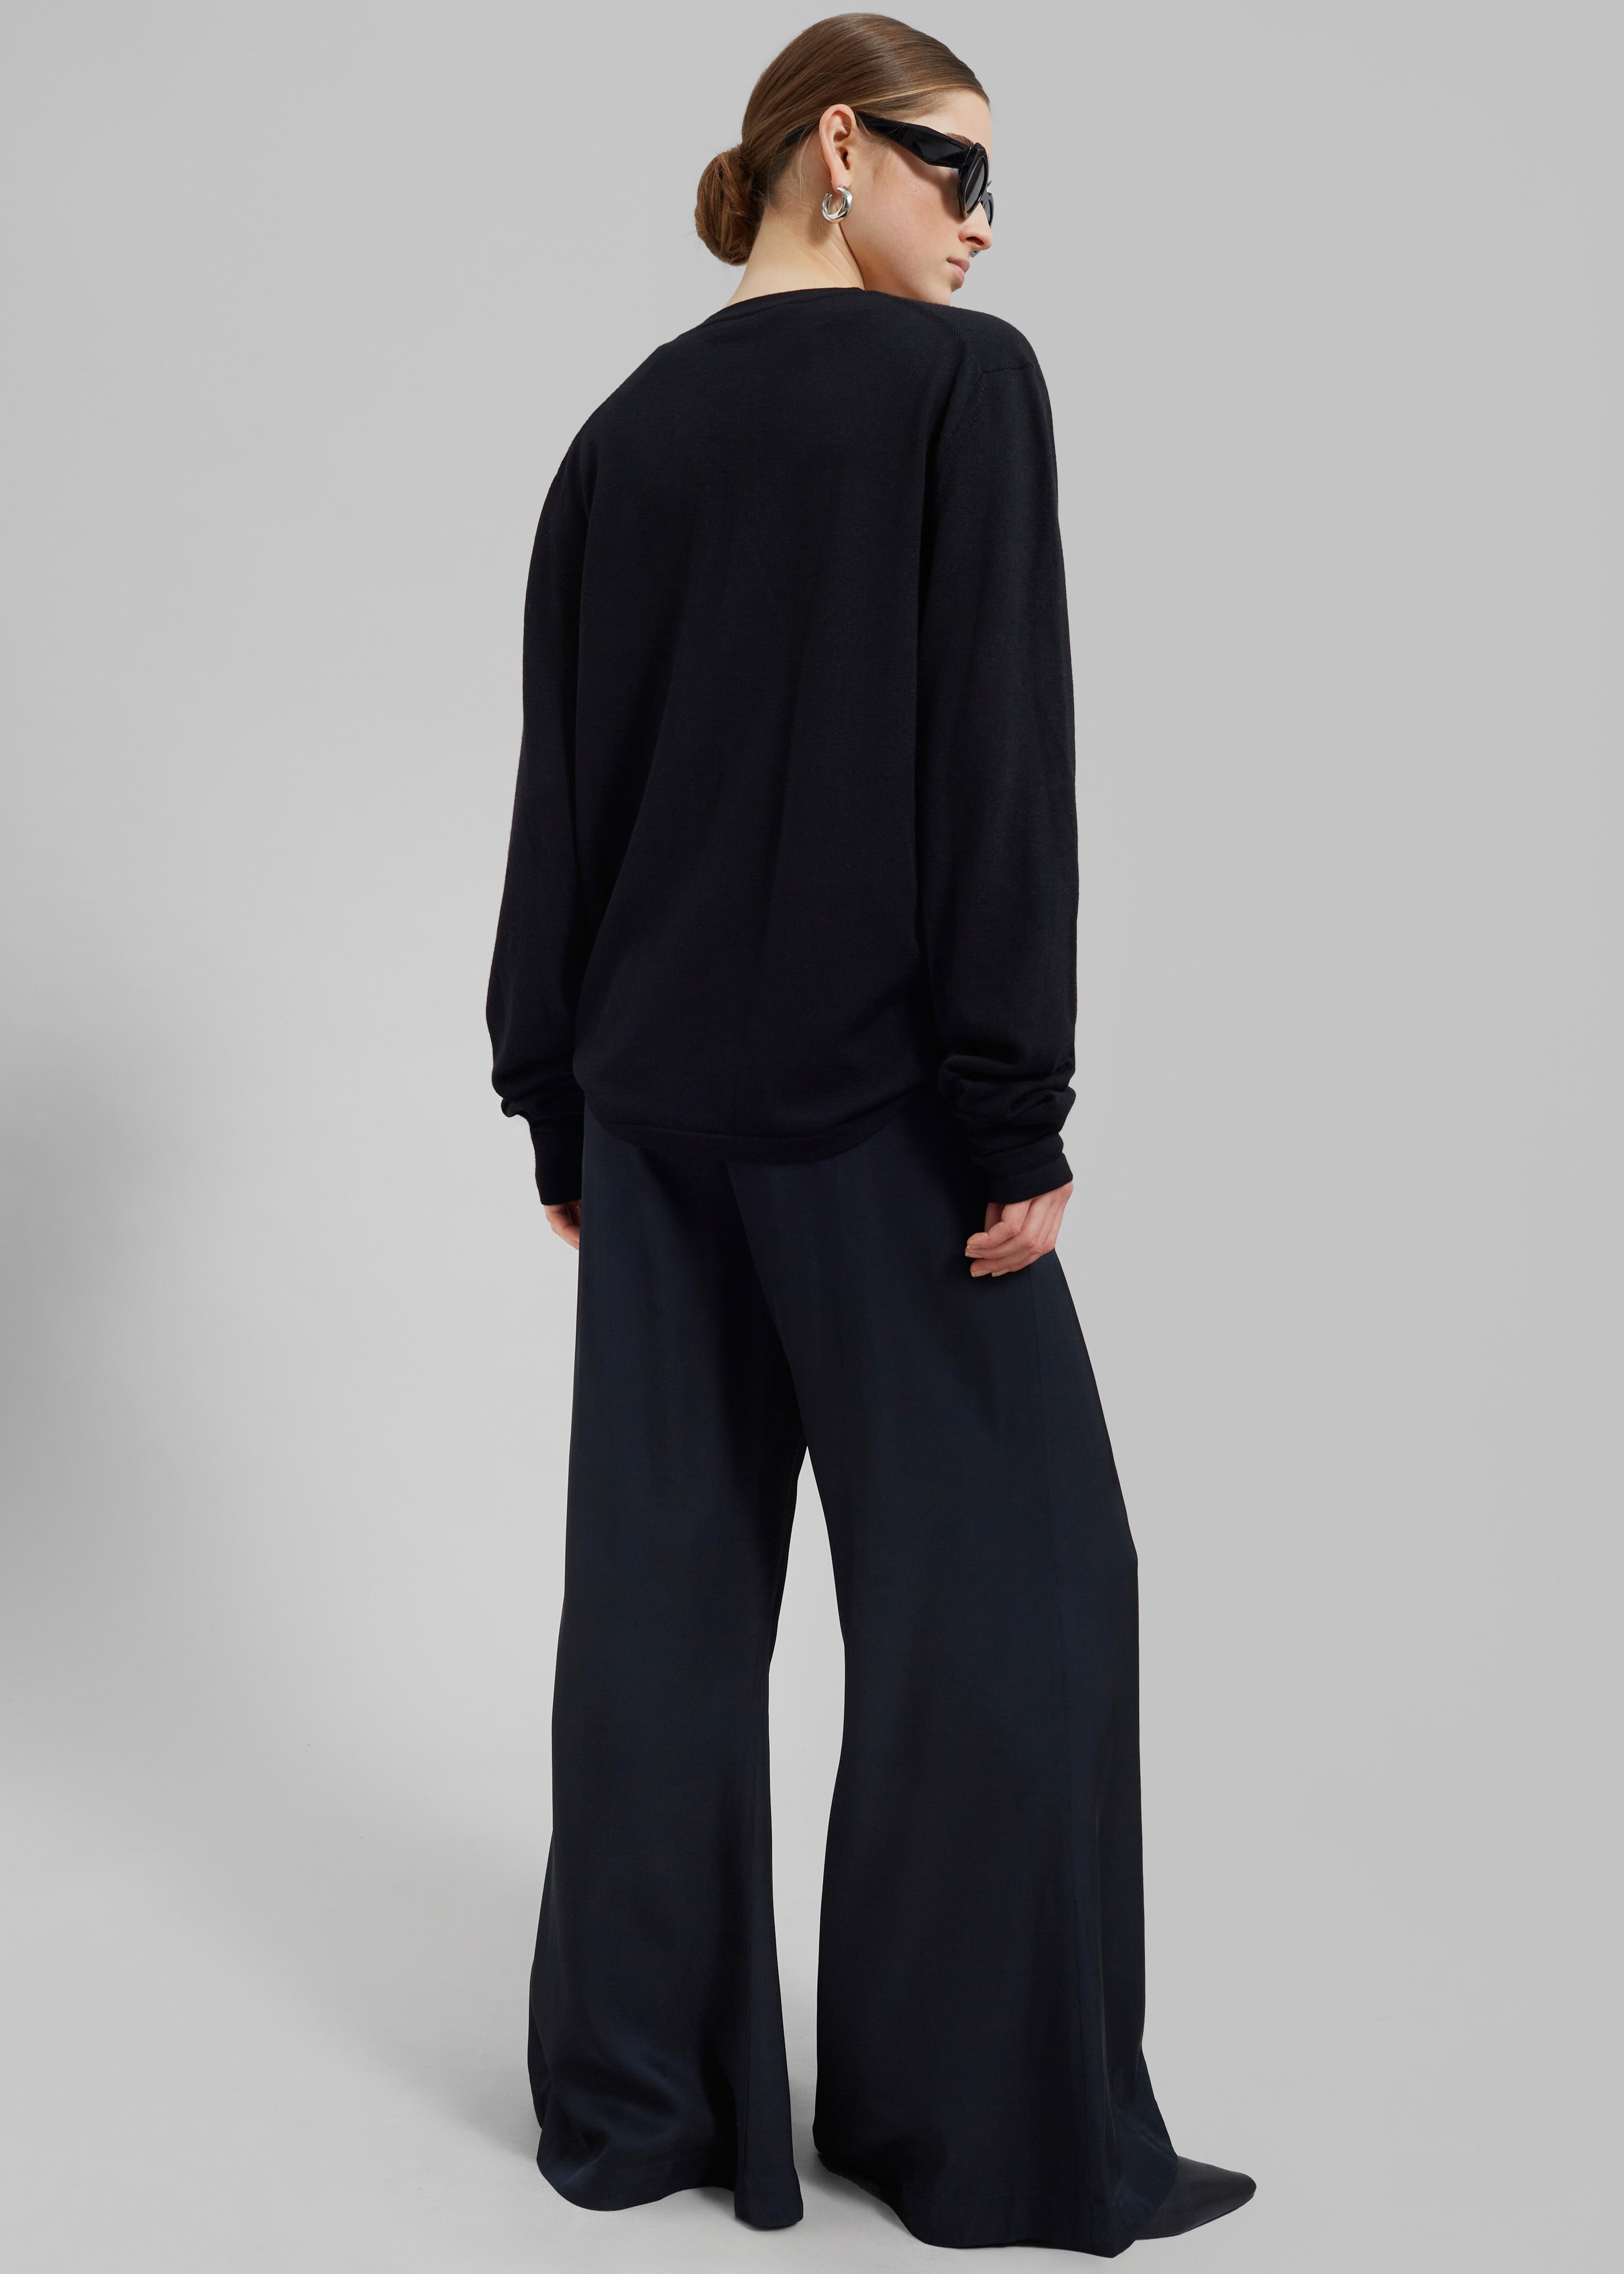 Selma Extra Long Sleeve Merino Wool Pullover - Black - 11